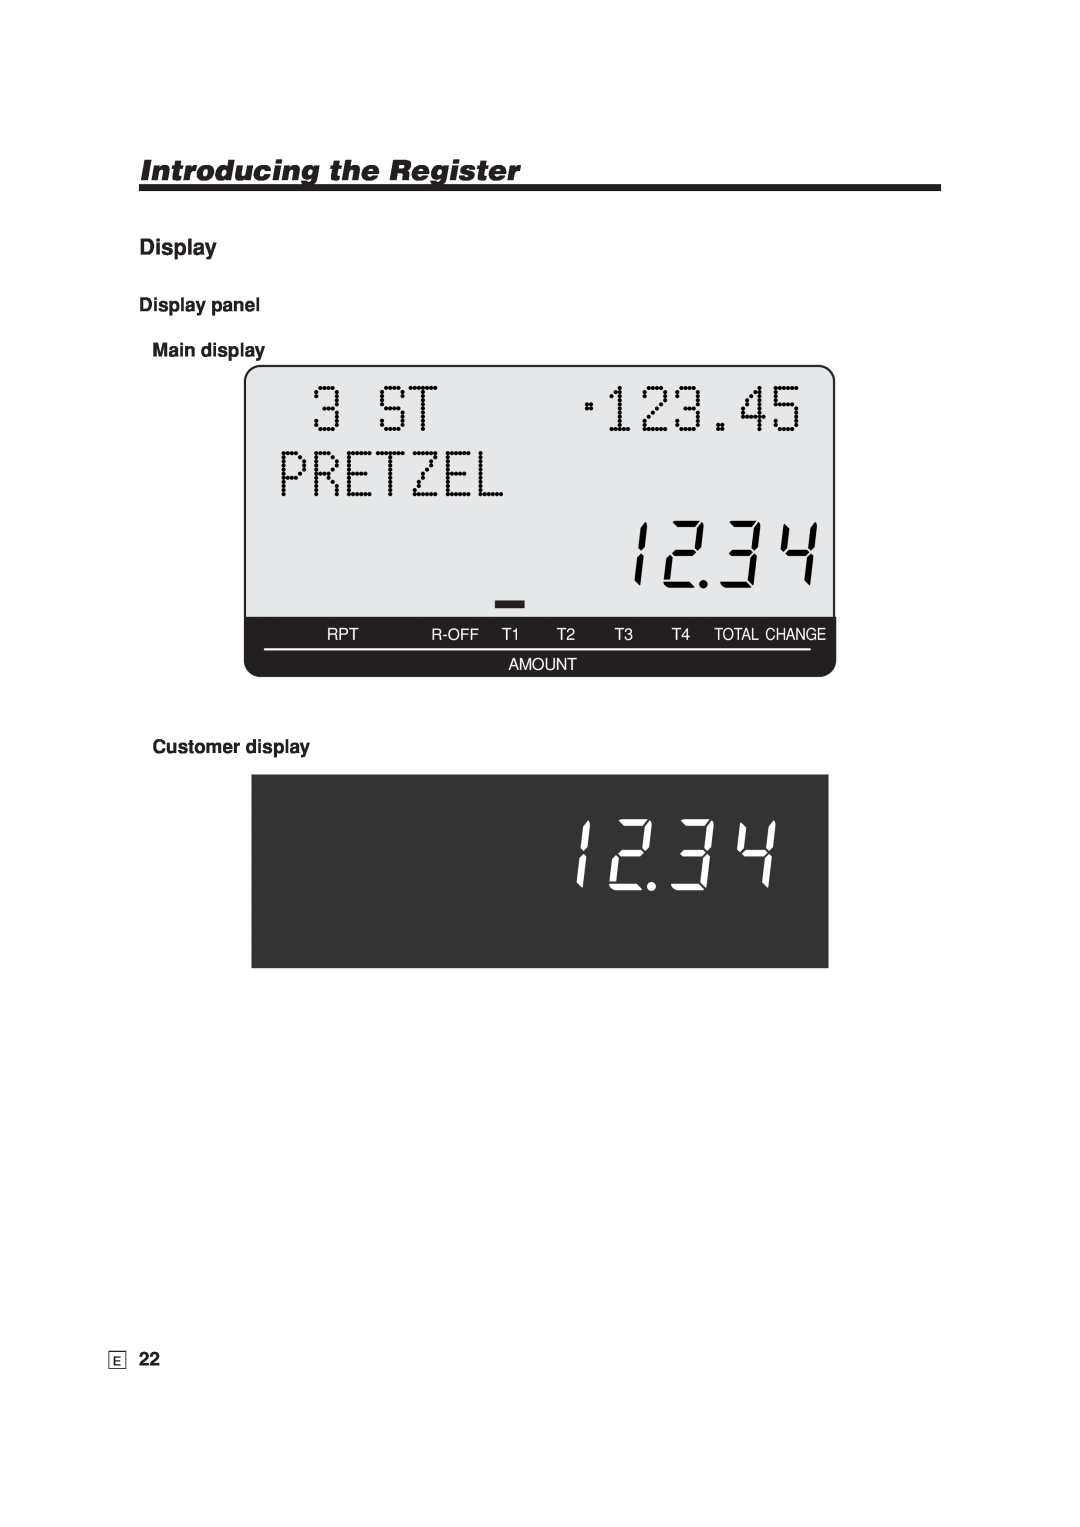 Casio SE-S6000 Display panel Main display, Customer display, 3 ST, 123.45, Pretzel, Introducing the Register, Amount 